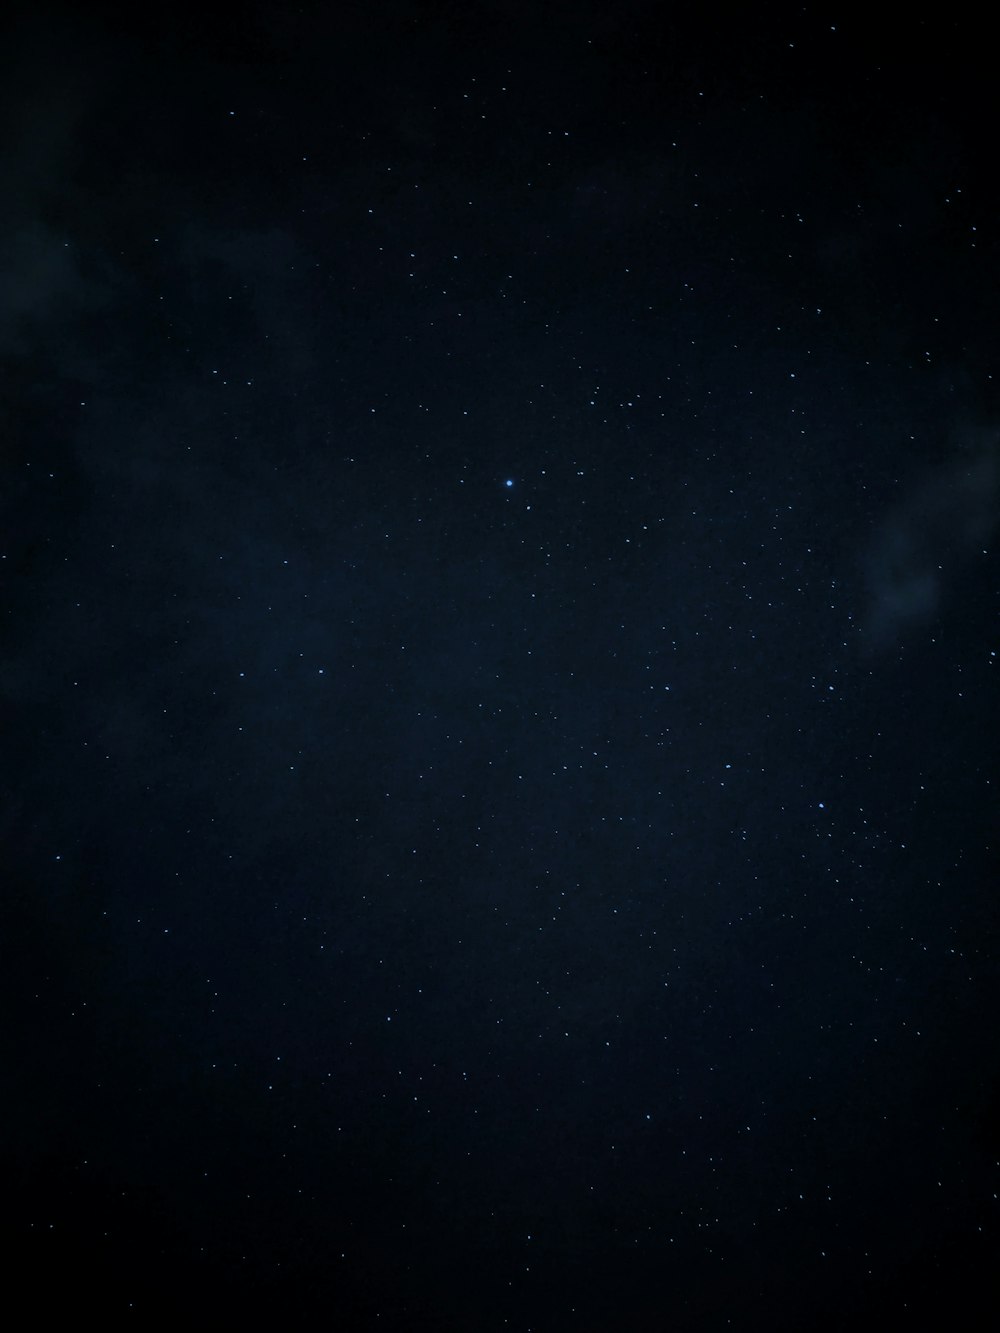 night sky with star